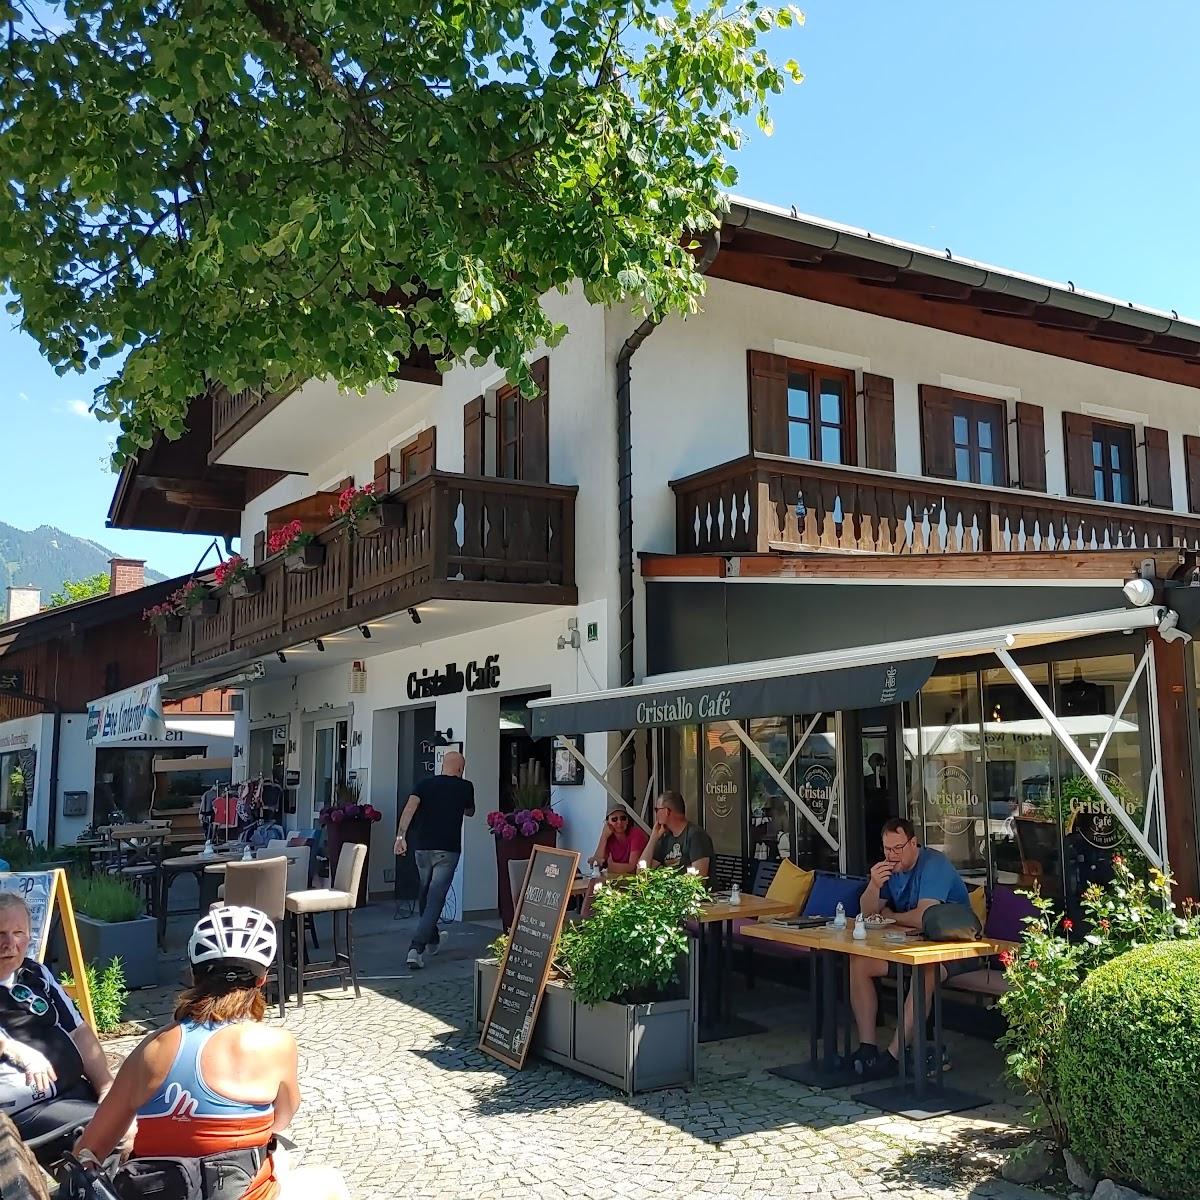 Restaurant "Cristallo Café" in Rottach-Egern